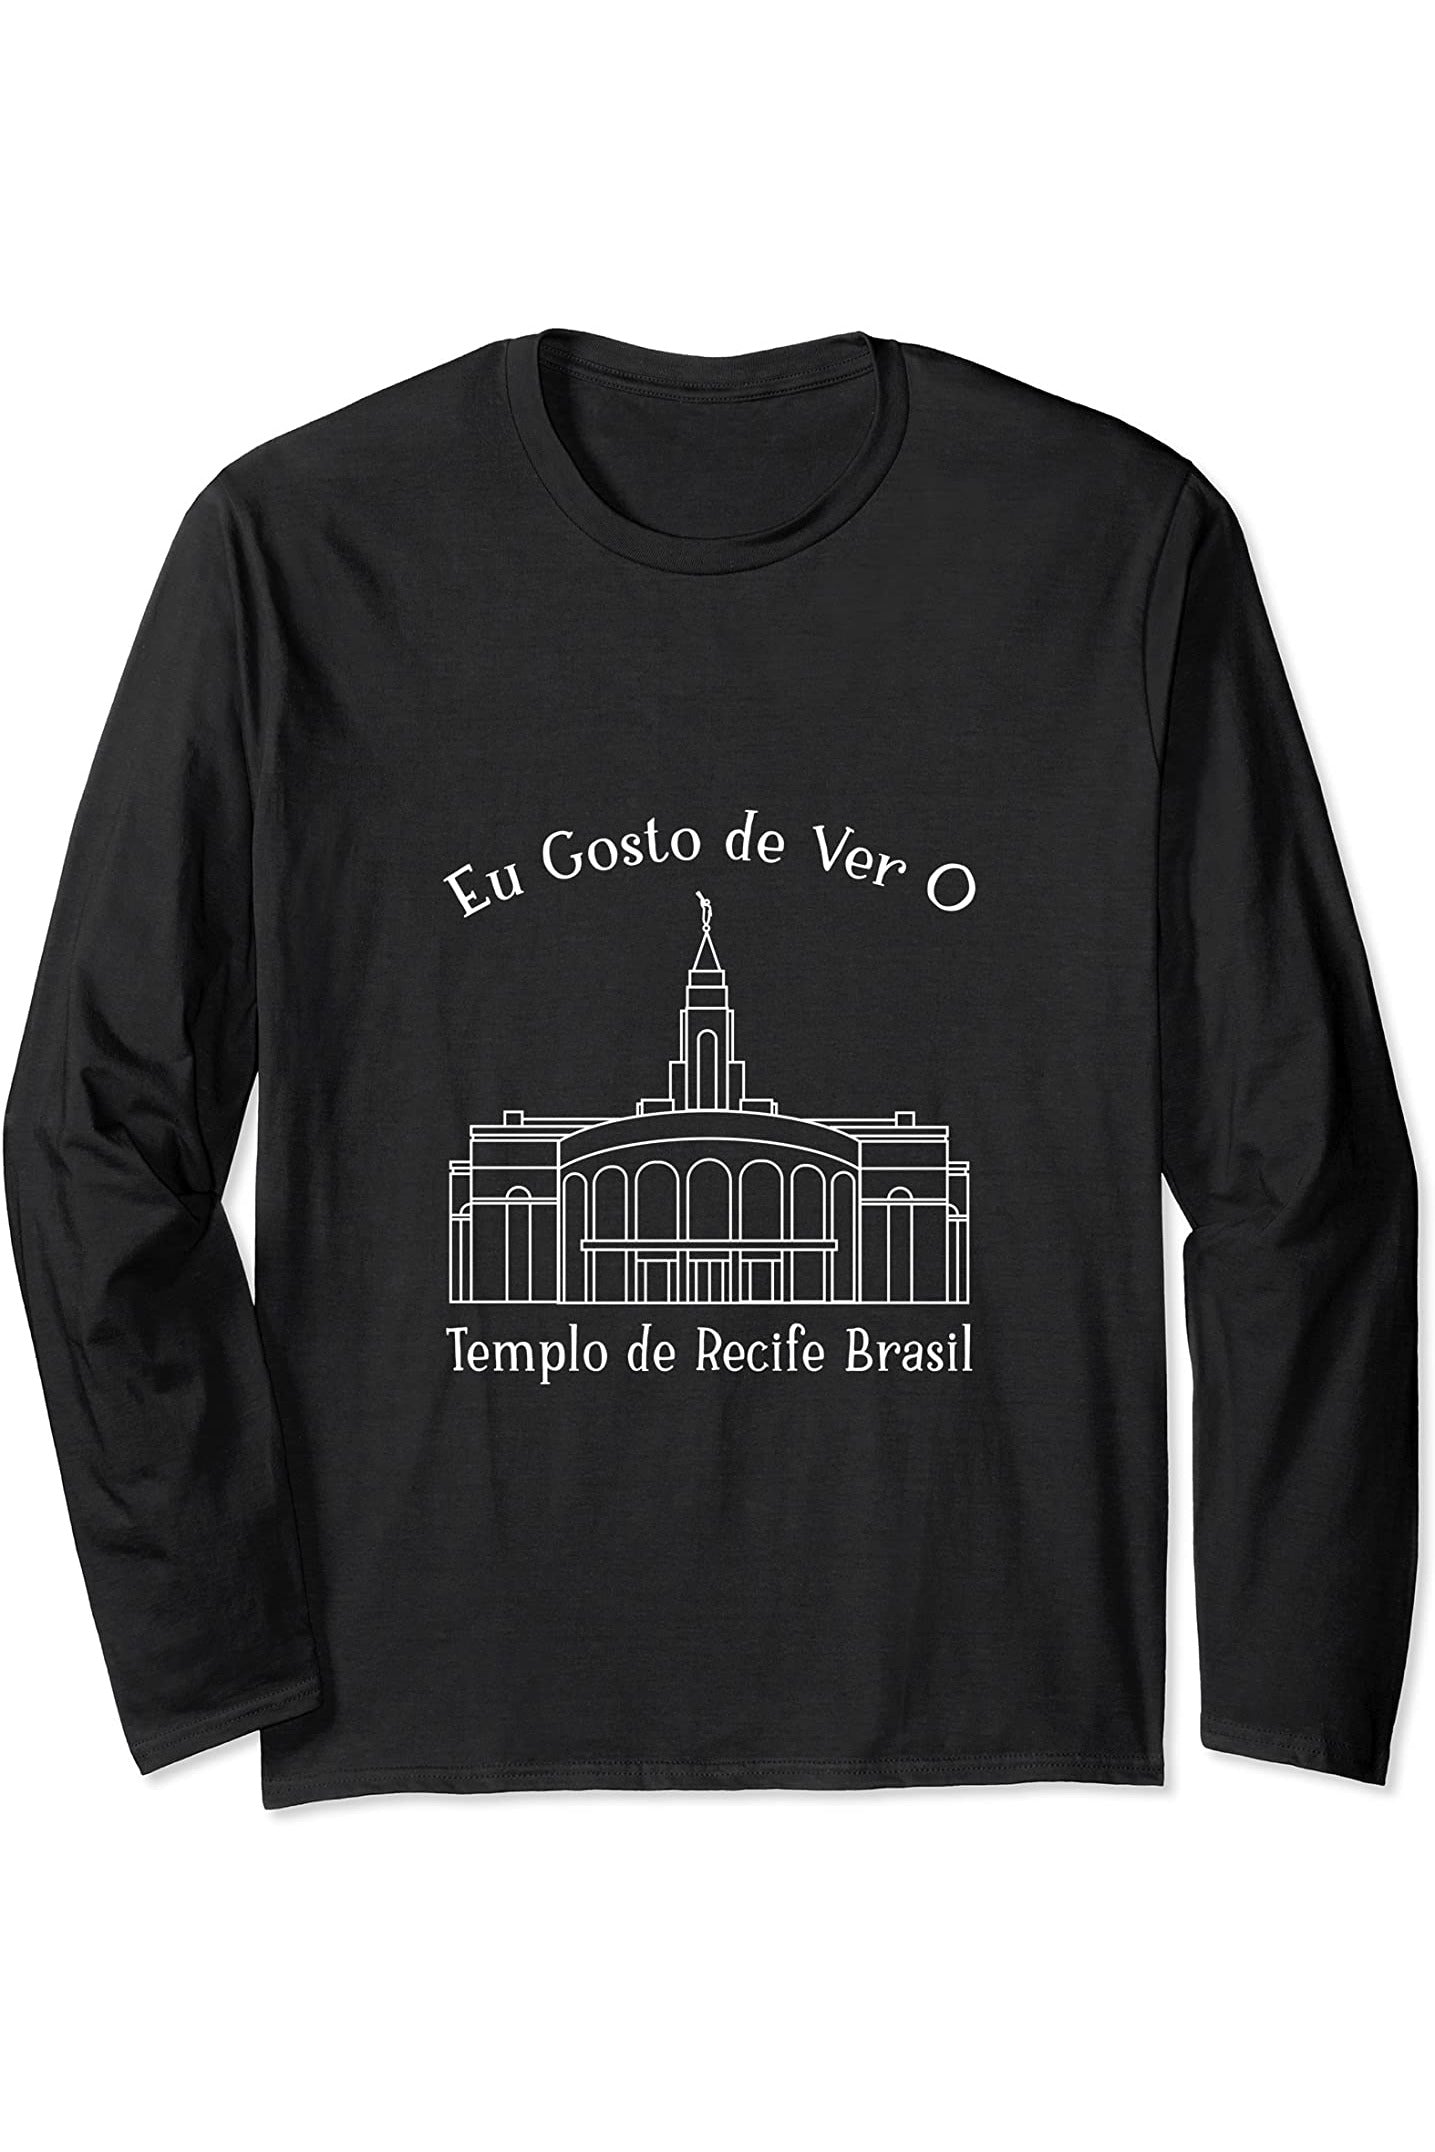 Recife Brazil Temple Long Sleeve T-Shirt - Happy Style (Portuguese) US